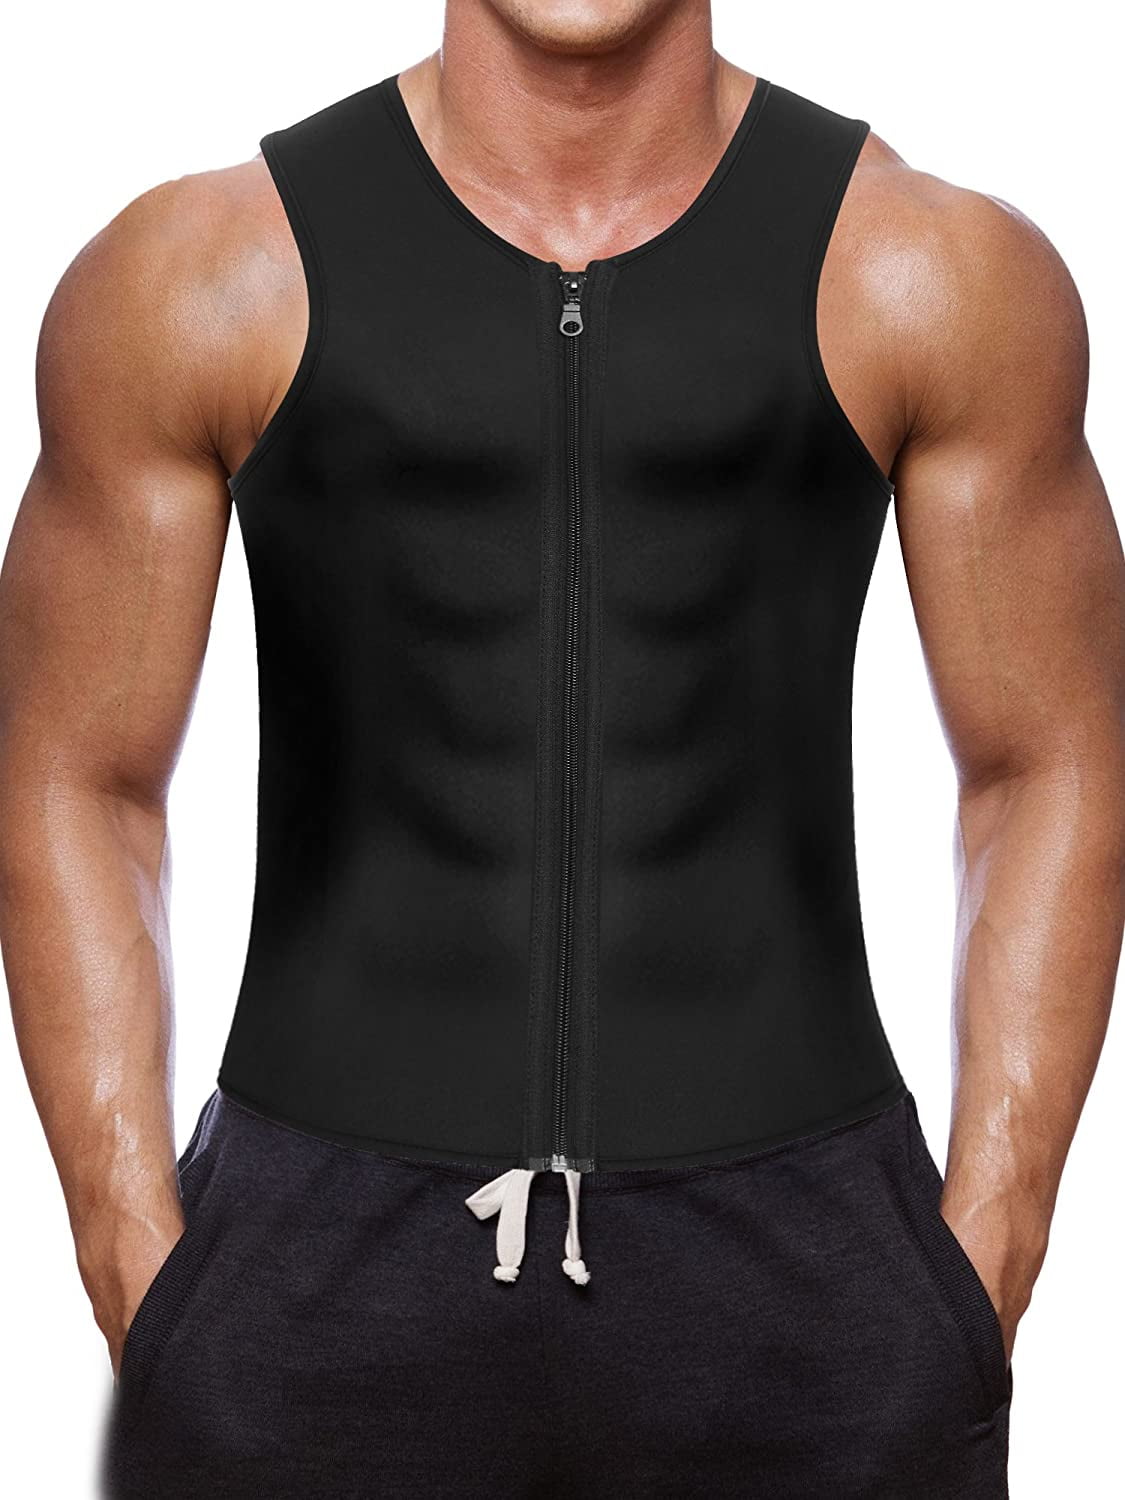 Men Neoprene Sauna Sweat Suit Waist Trainer Body Shaper Vest Tummy Control Shirt 